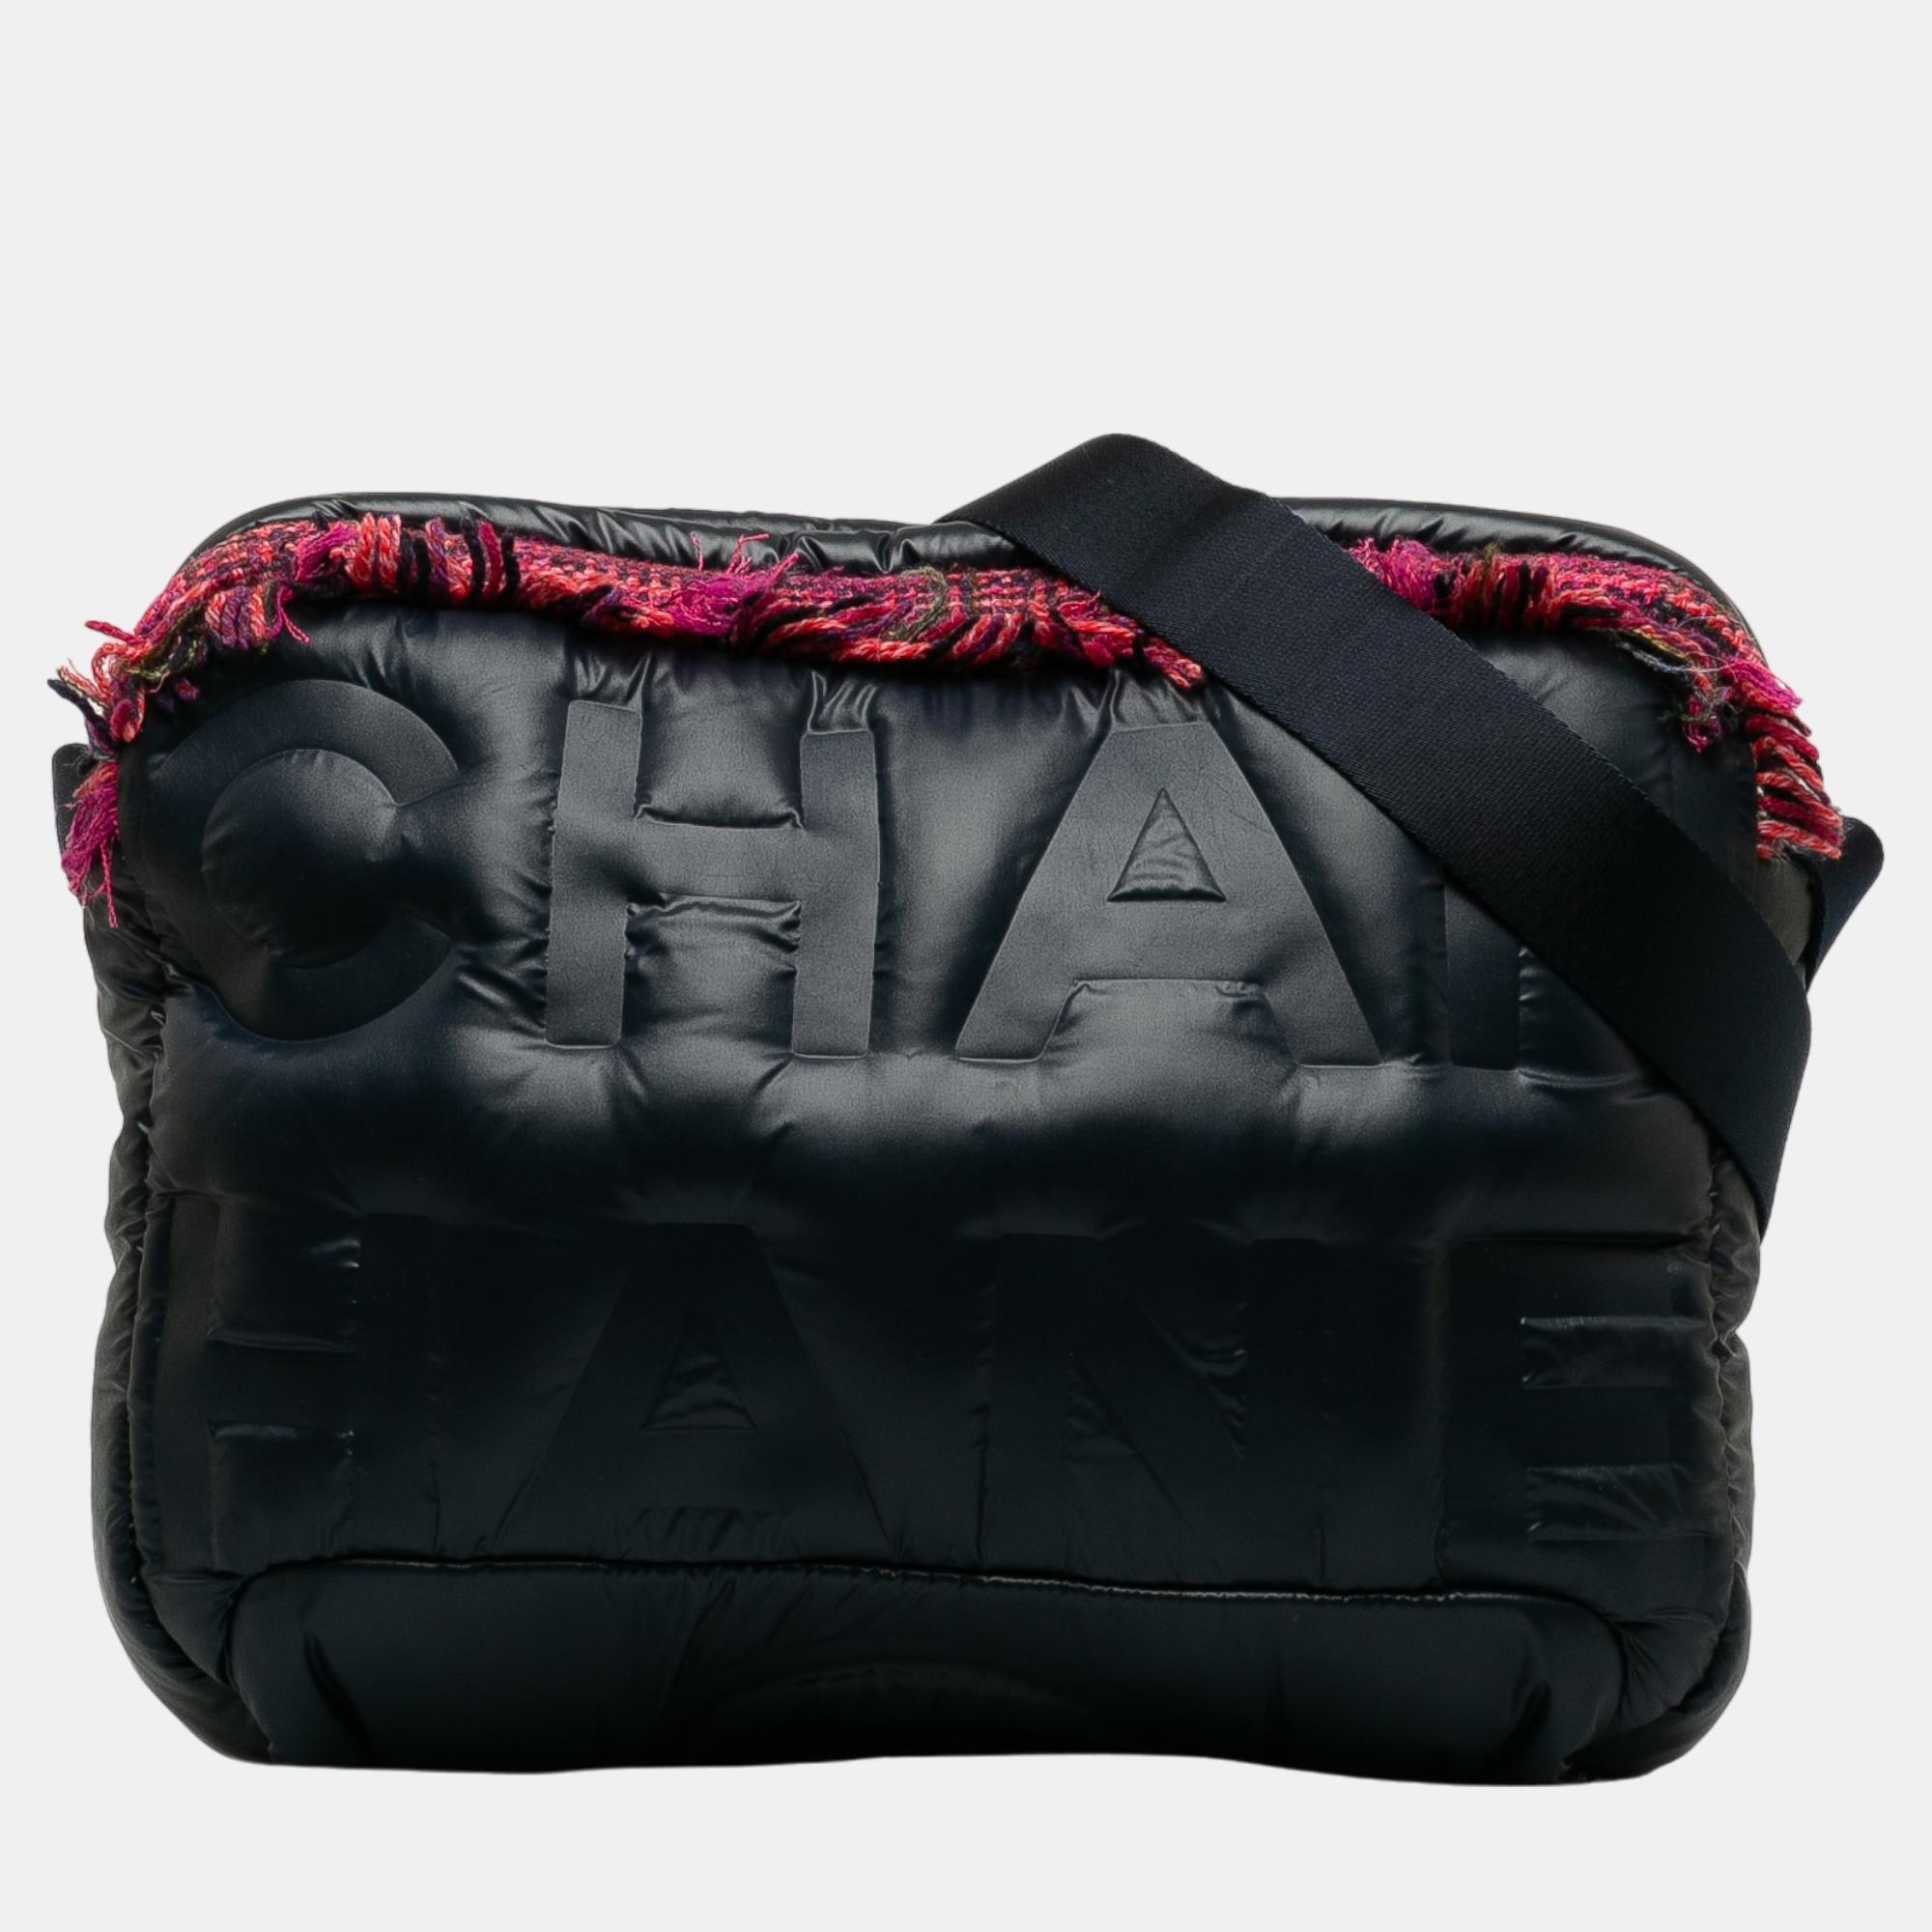 Chanel black doudoune crossbody bag